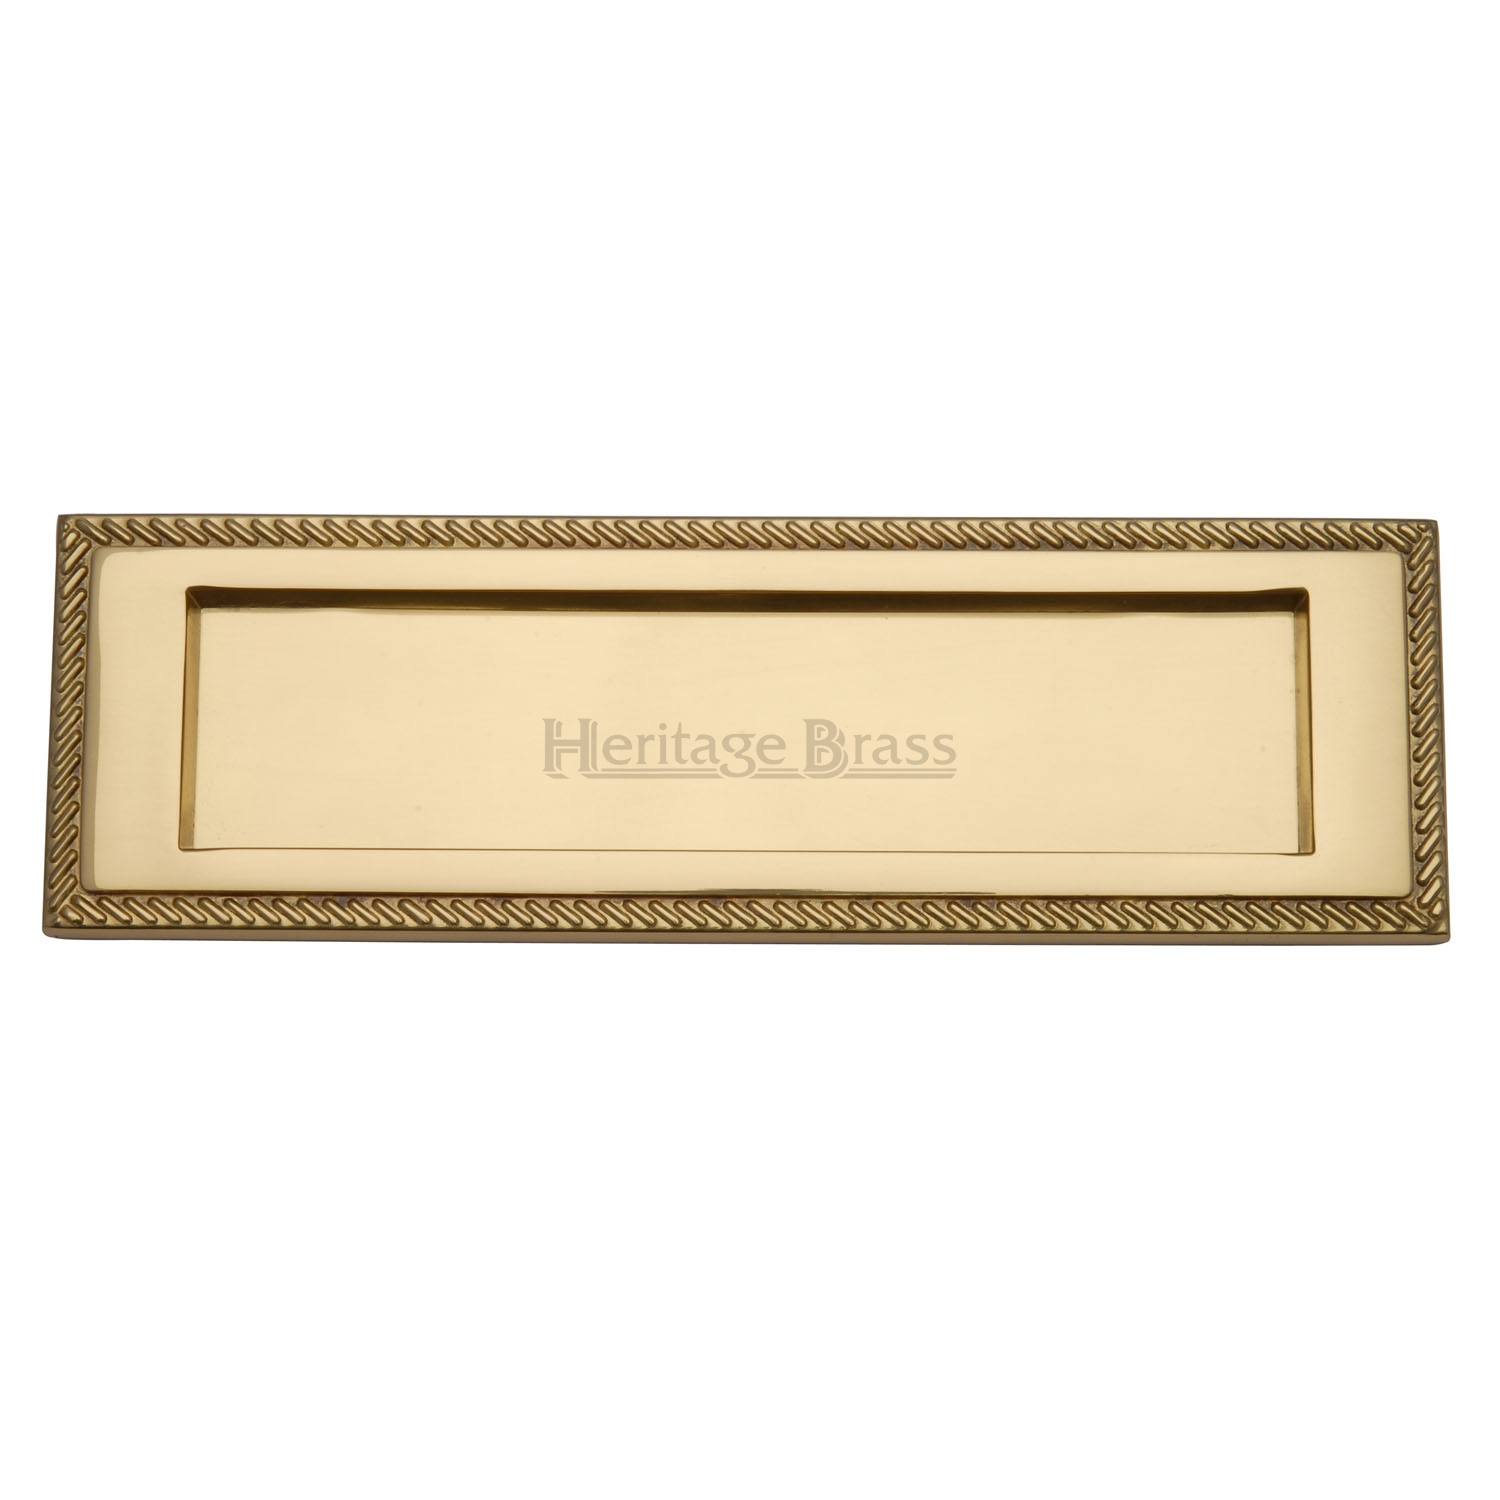 Heritage Brass Georgian Rope Letterplate 11" x 3 1/2"